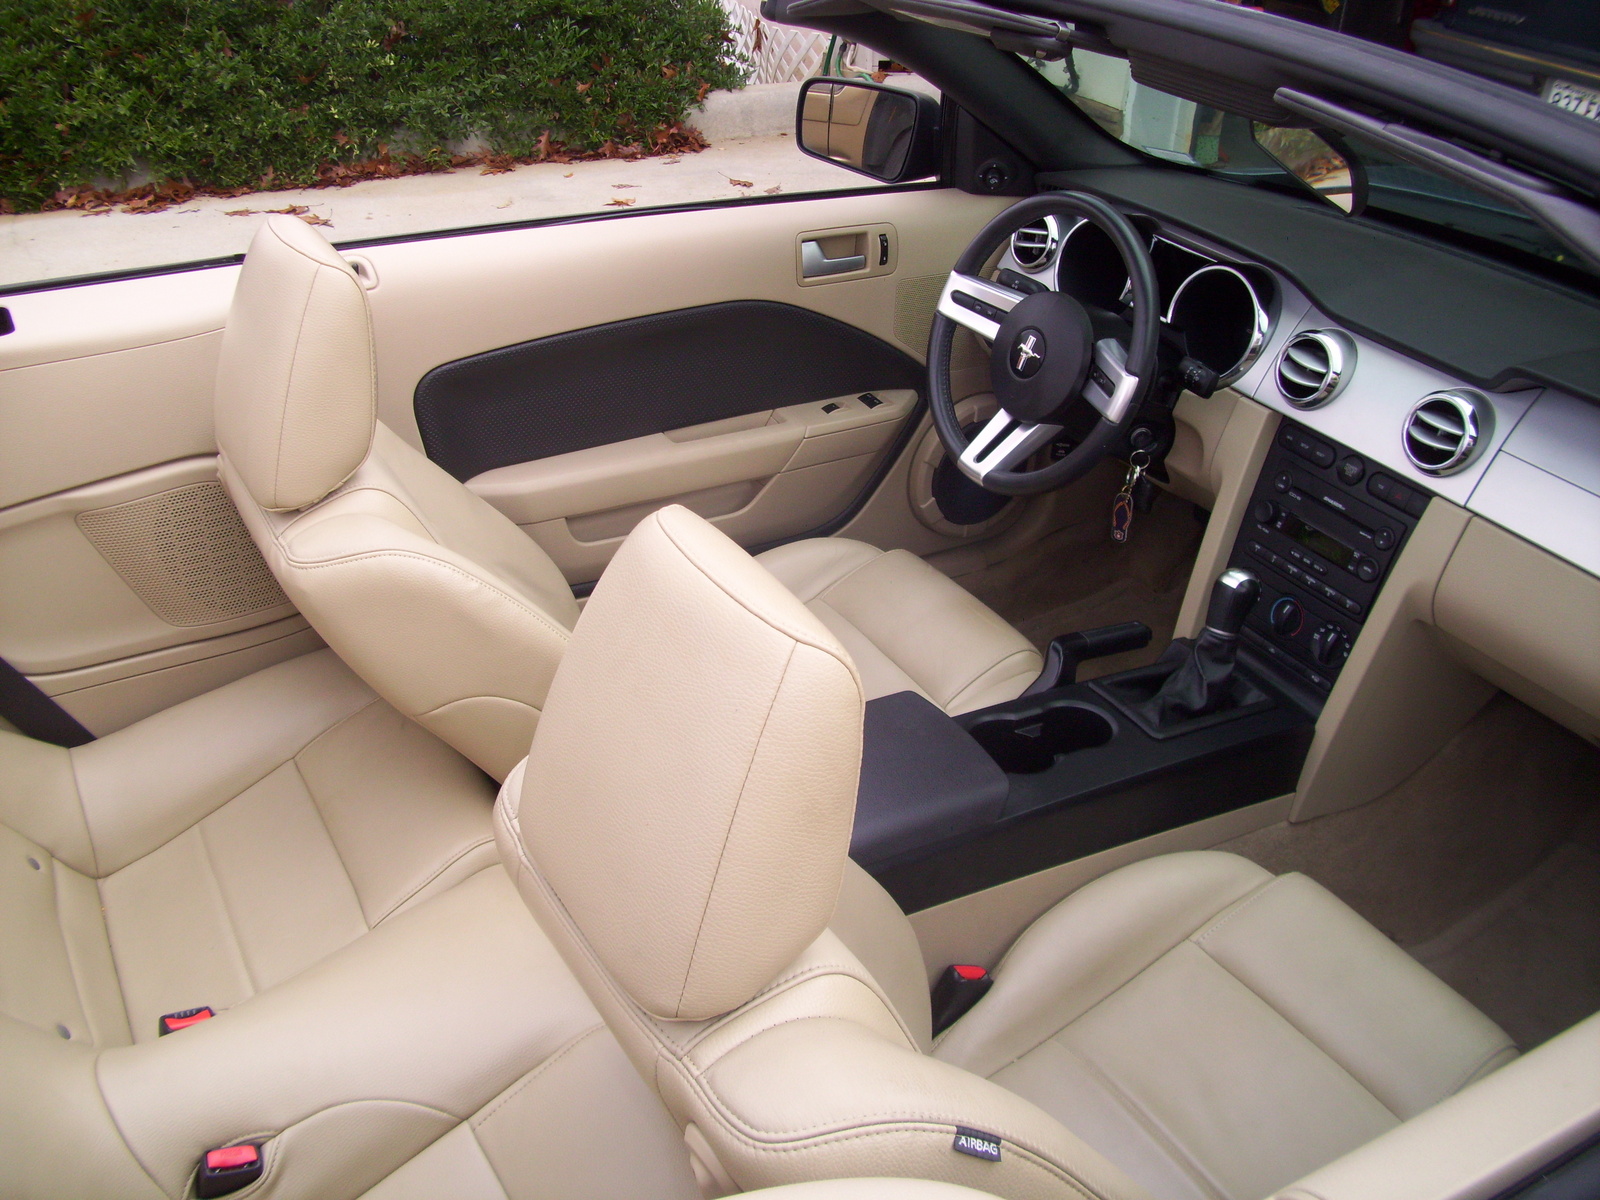 2006 Ford mustang convertible interior #3